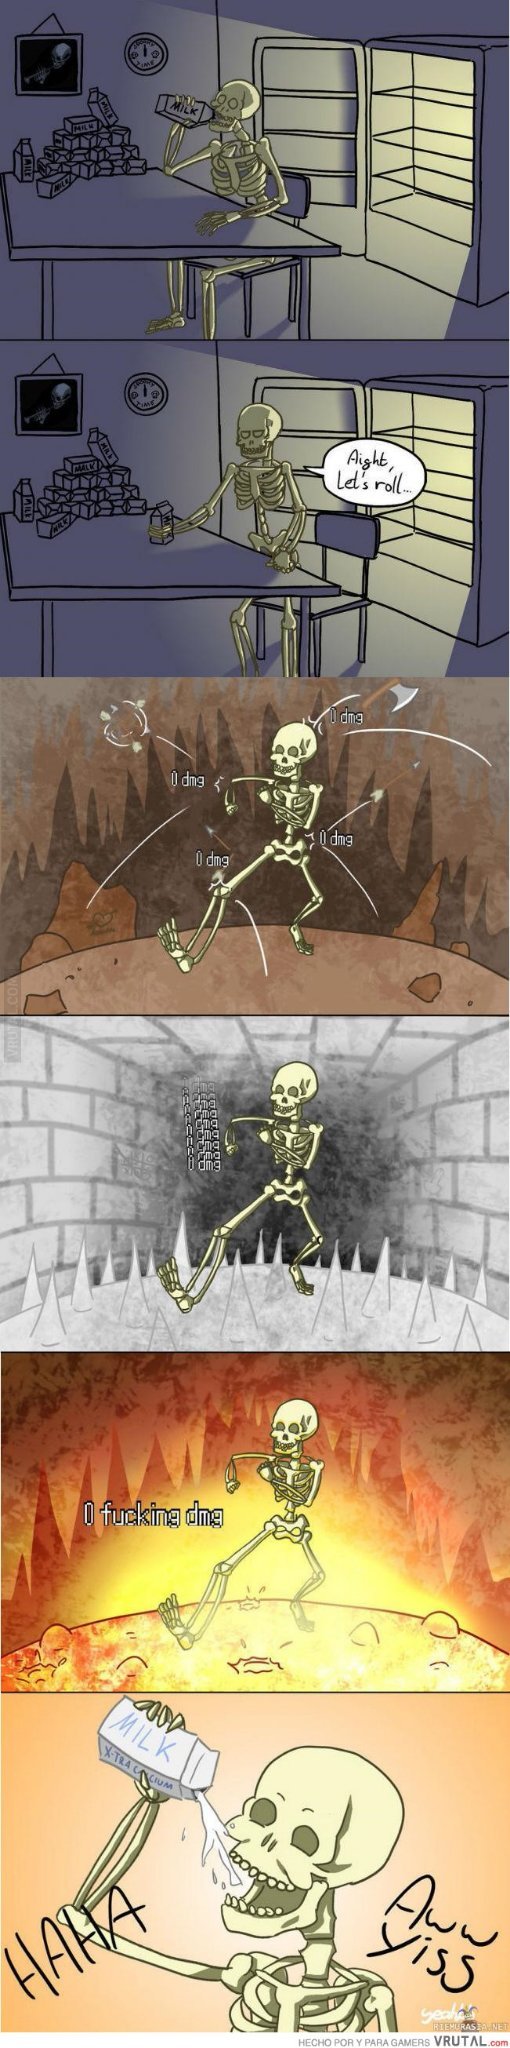 Cuando juegas dark souls como esqueleto - meme